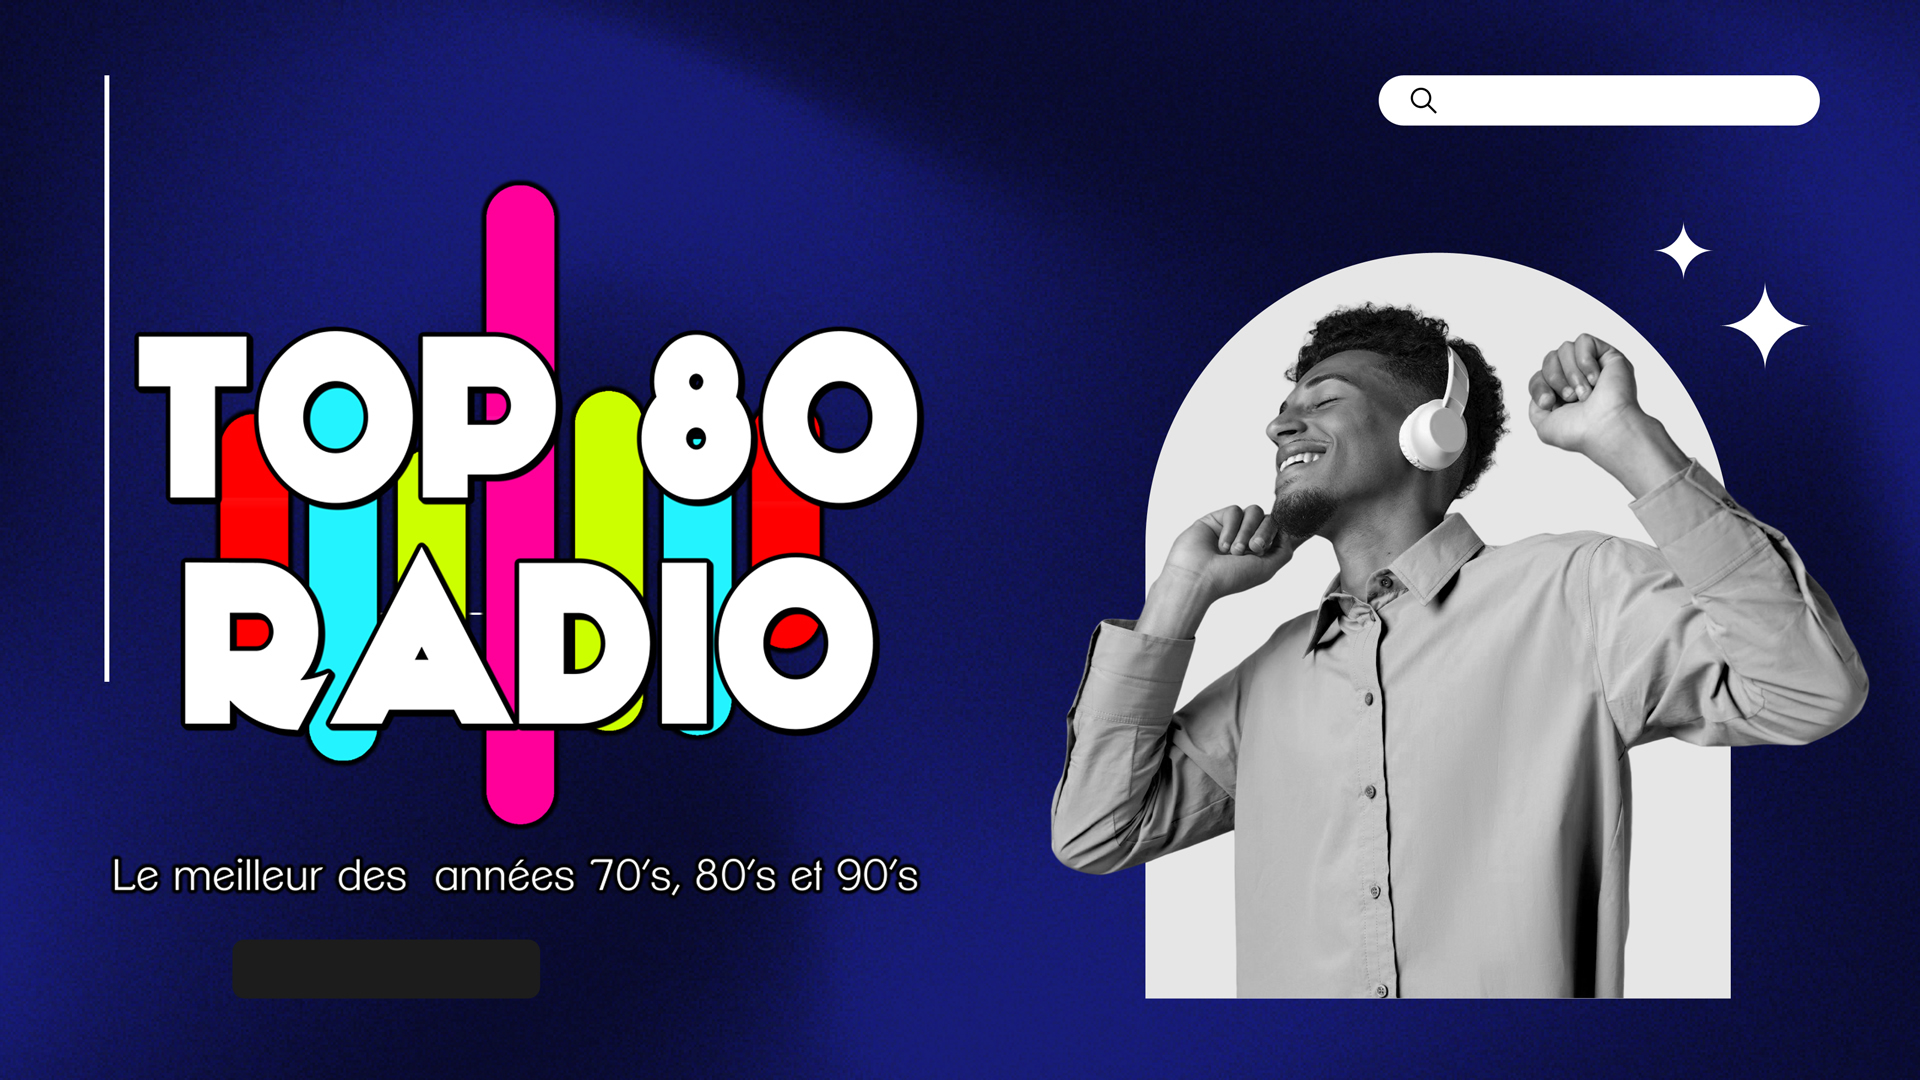 WALLPAPER–TOP-80-RADIO—33